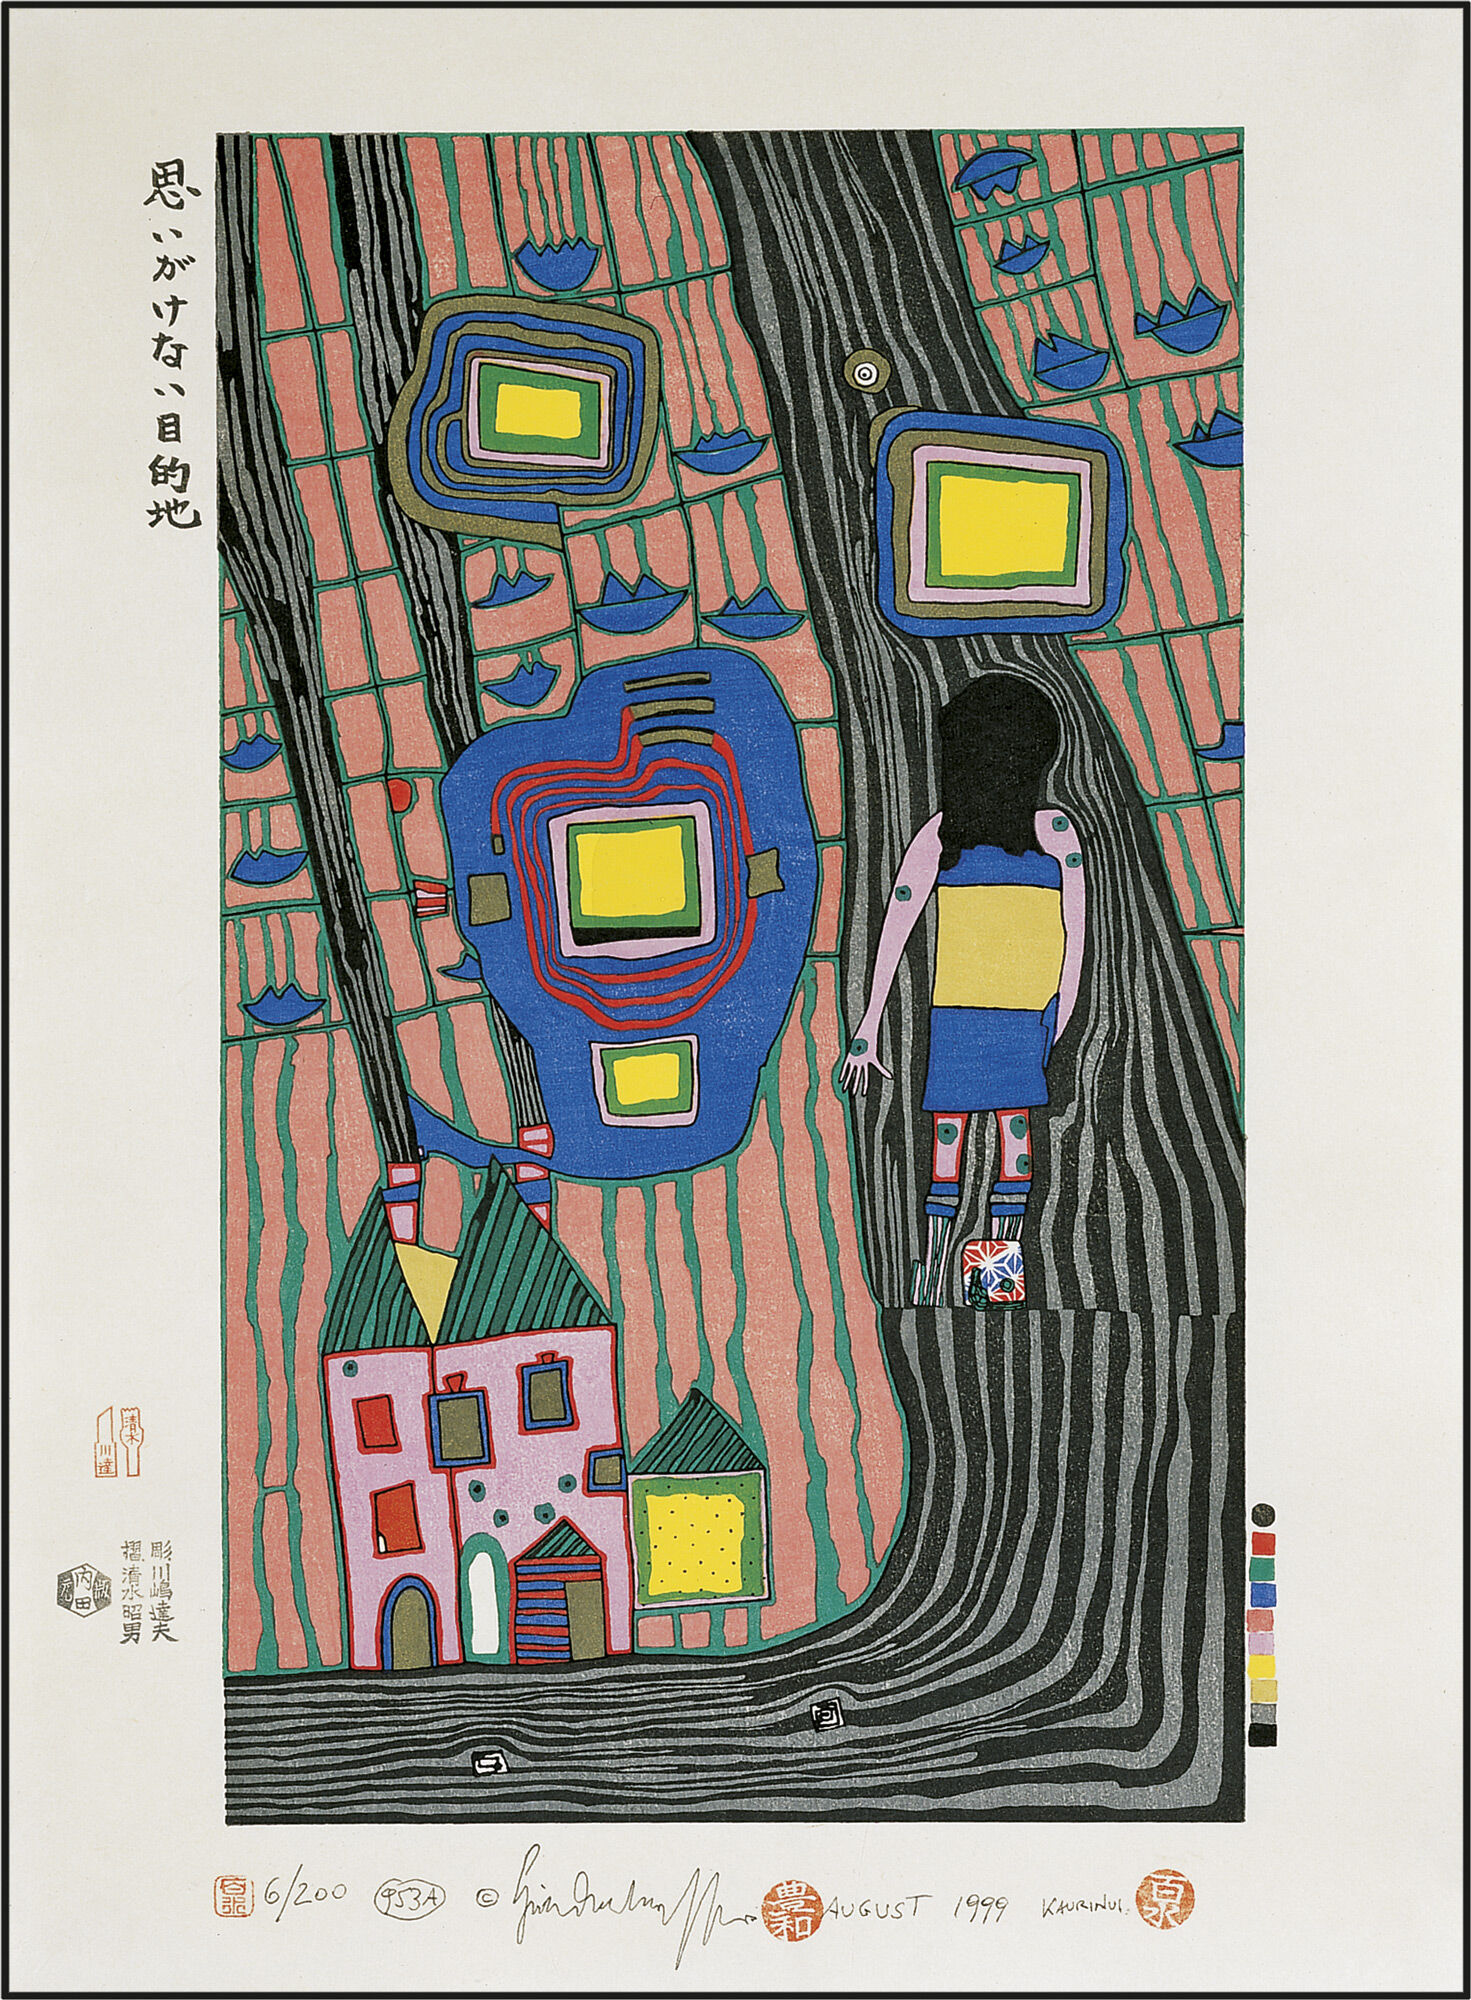 953A OMOIGAKENAI MOKUTEKICHI, UNEXPECTEDT DESTINATIONS, LE BUT IMPREVU, DAS UNERWARTETE ZIEL (1999) (Japanese woodblock print) by Friedensreich Hundertwasser